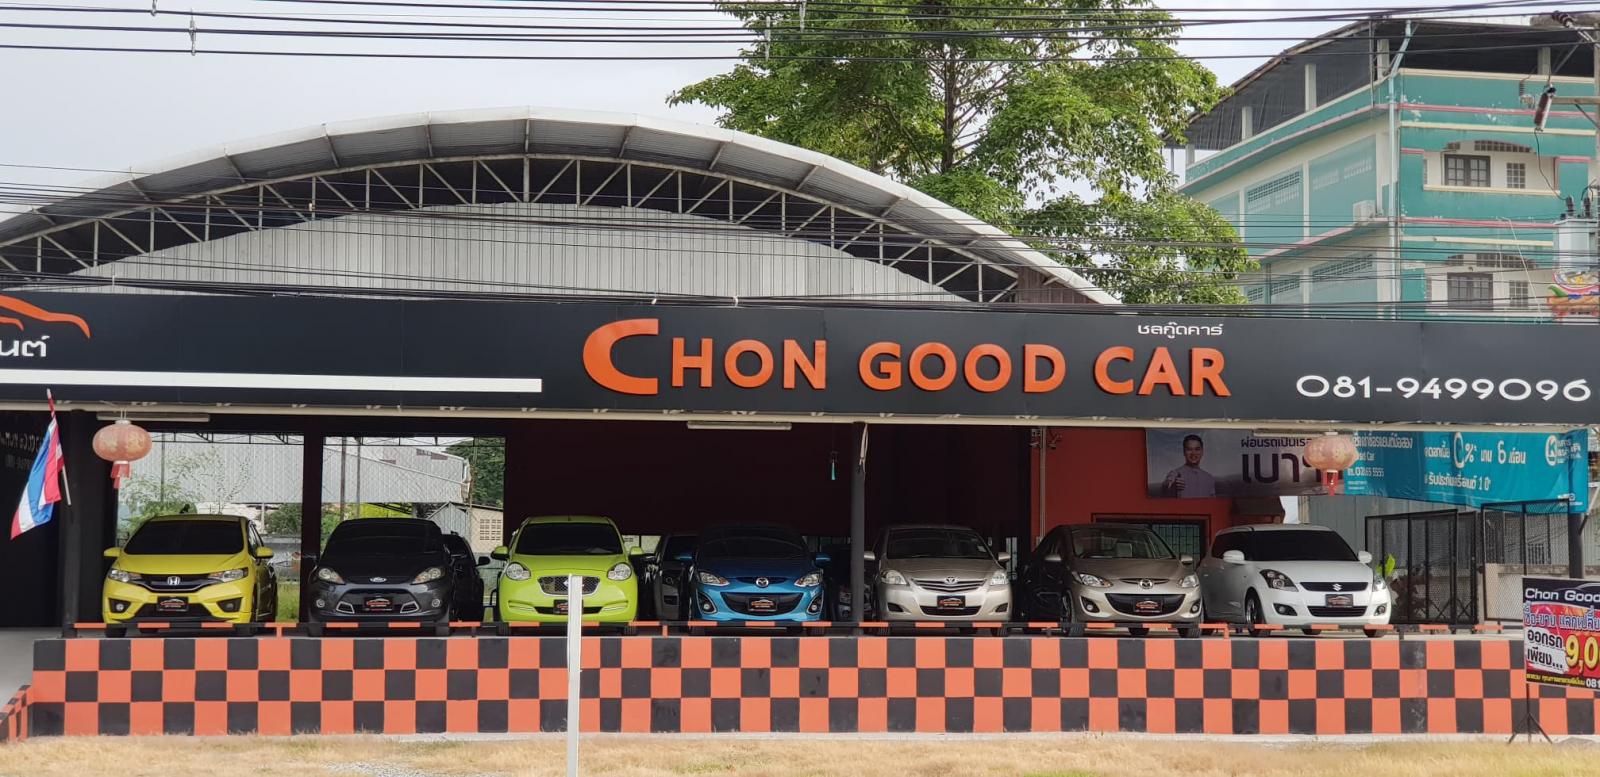 Chon good car